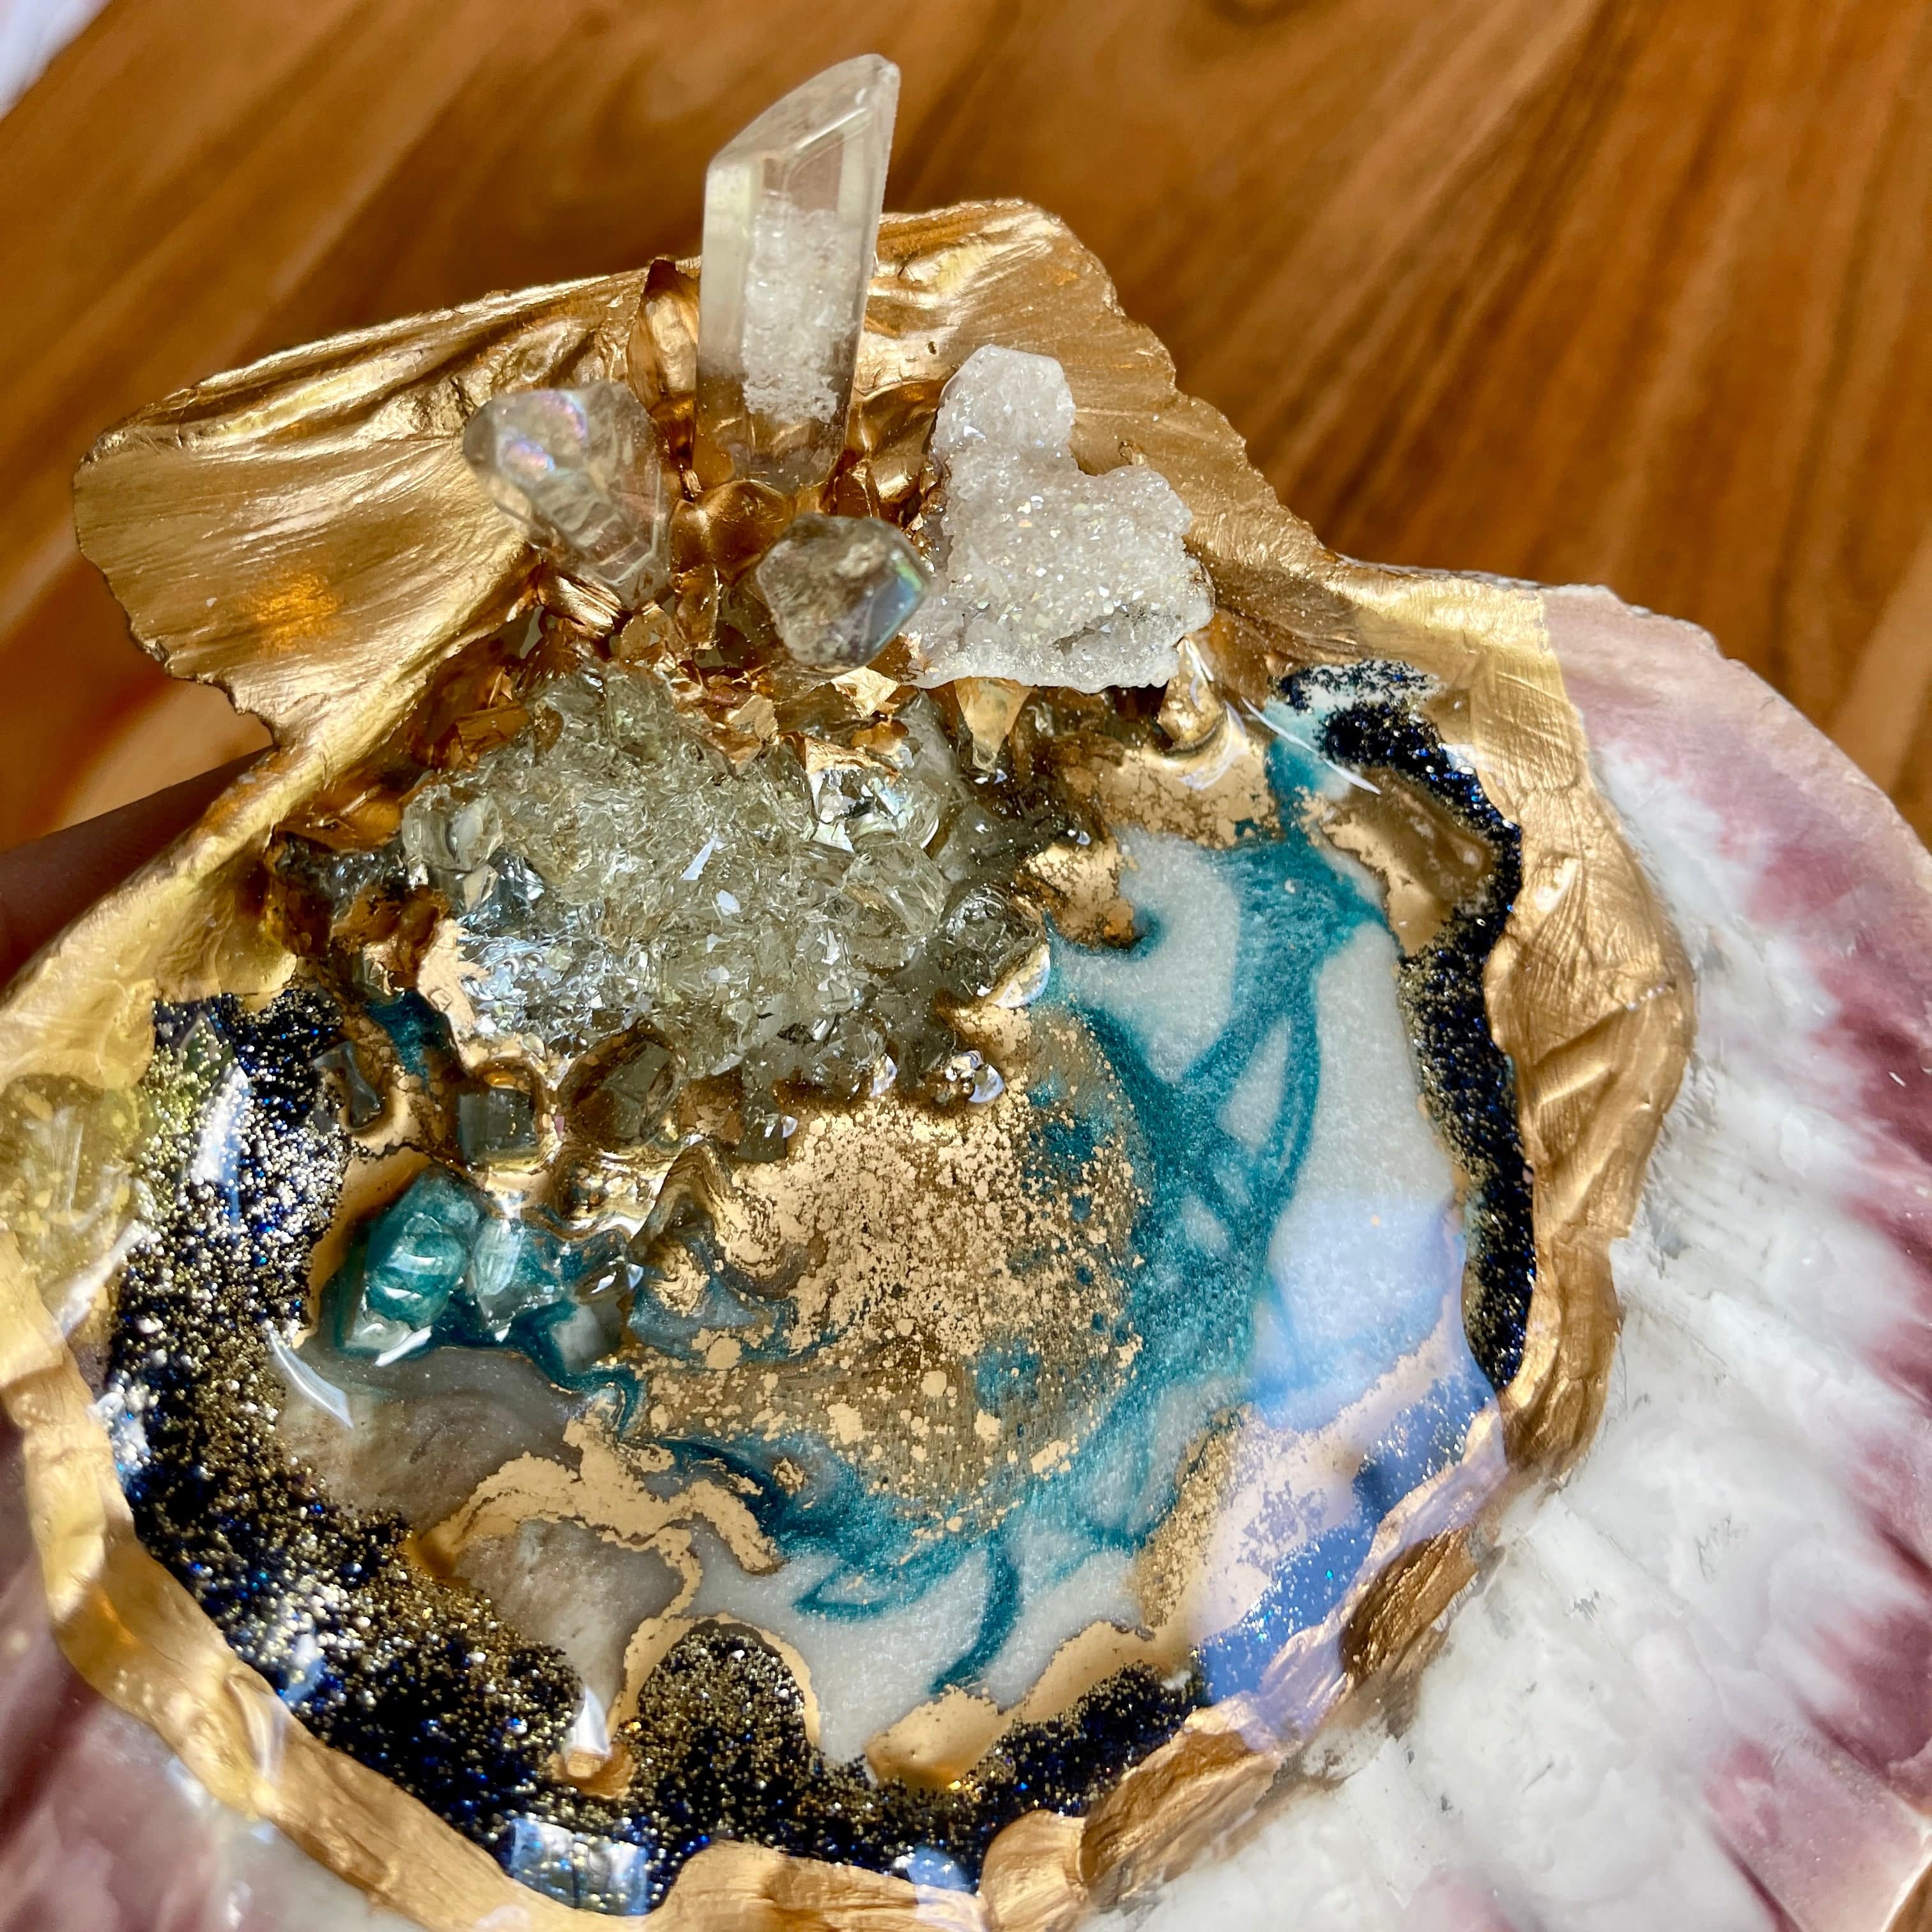 XL Lion's Paw Geode Resin Ring Dish - White Druzy, Clear Quartz and Blue - Pretty Crafty Lady Shop